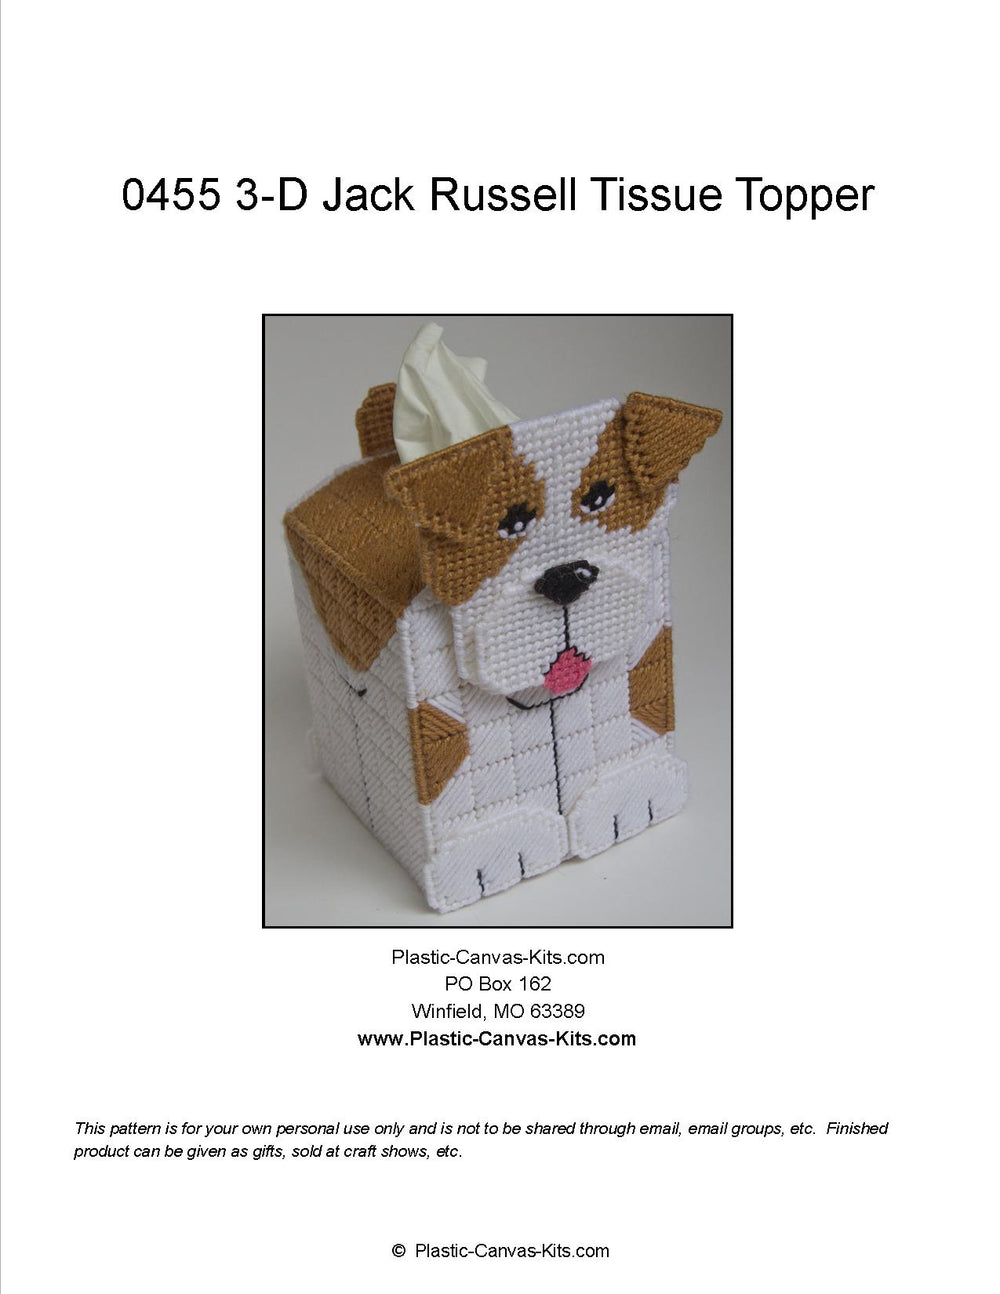 Jack Russell Terrier 3-D Tissue Topper